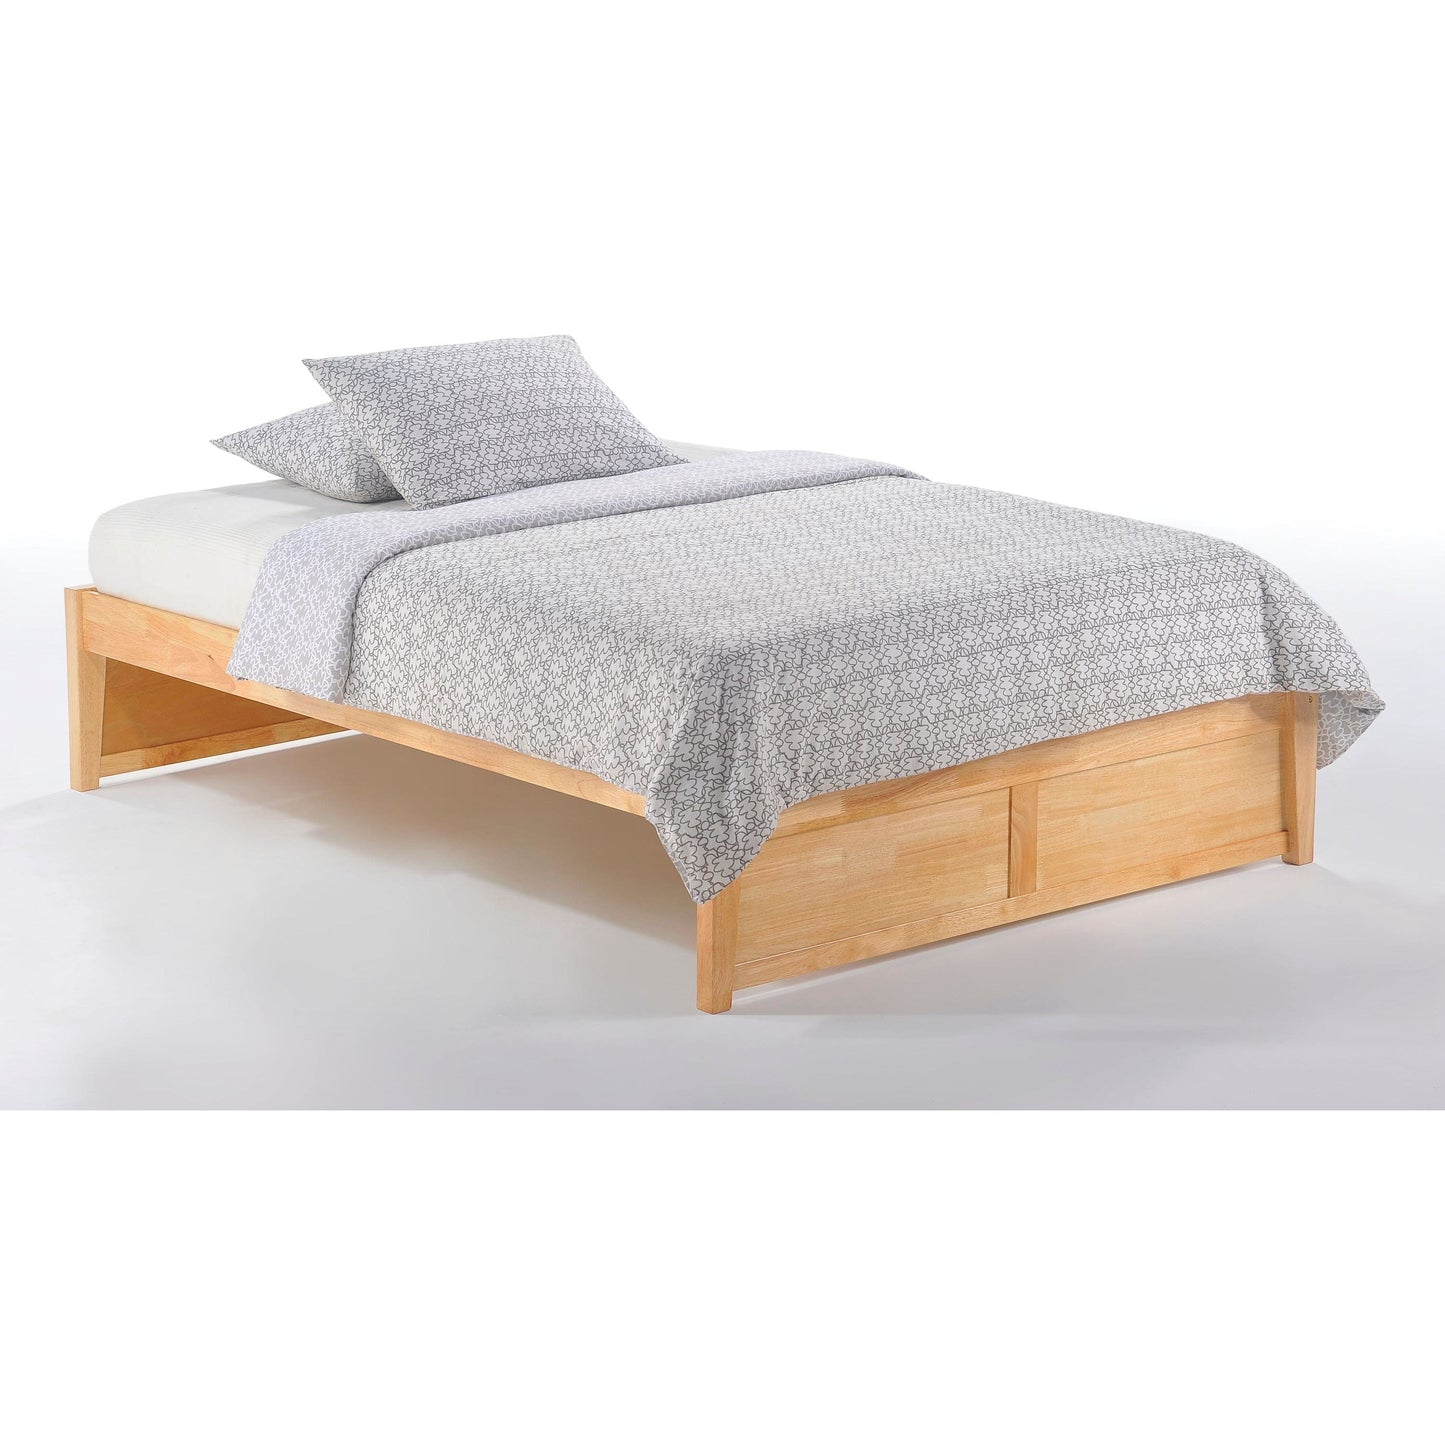 The Bedroom Emporium King Basic Platform Bed in chocolate finish (K Series)